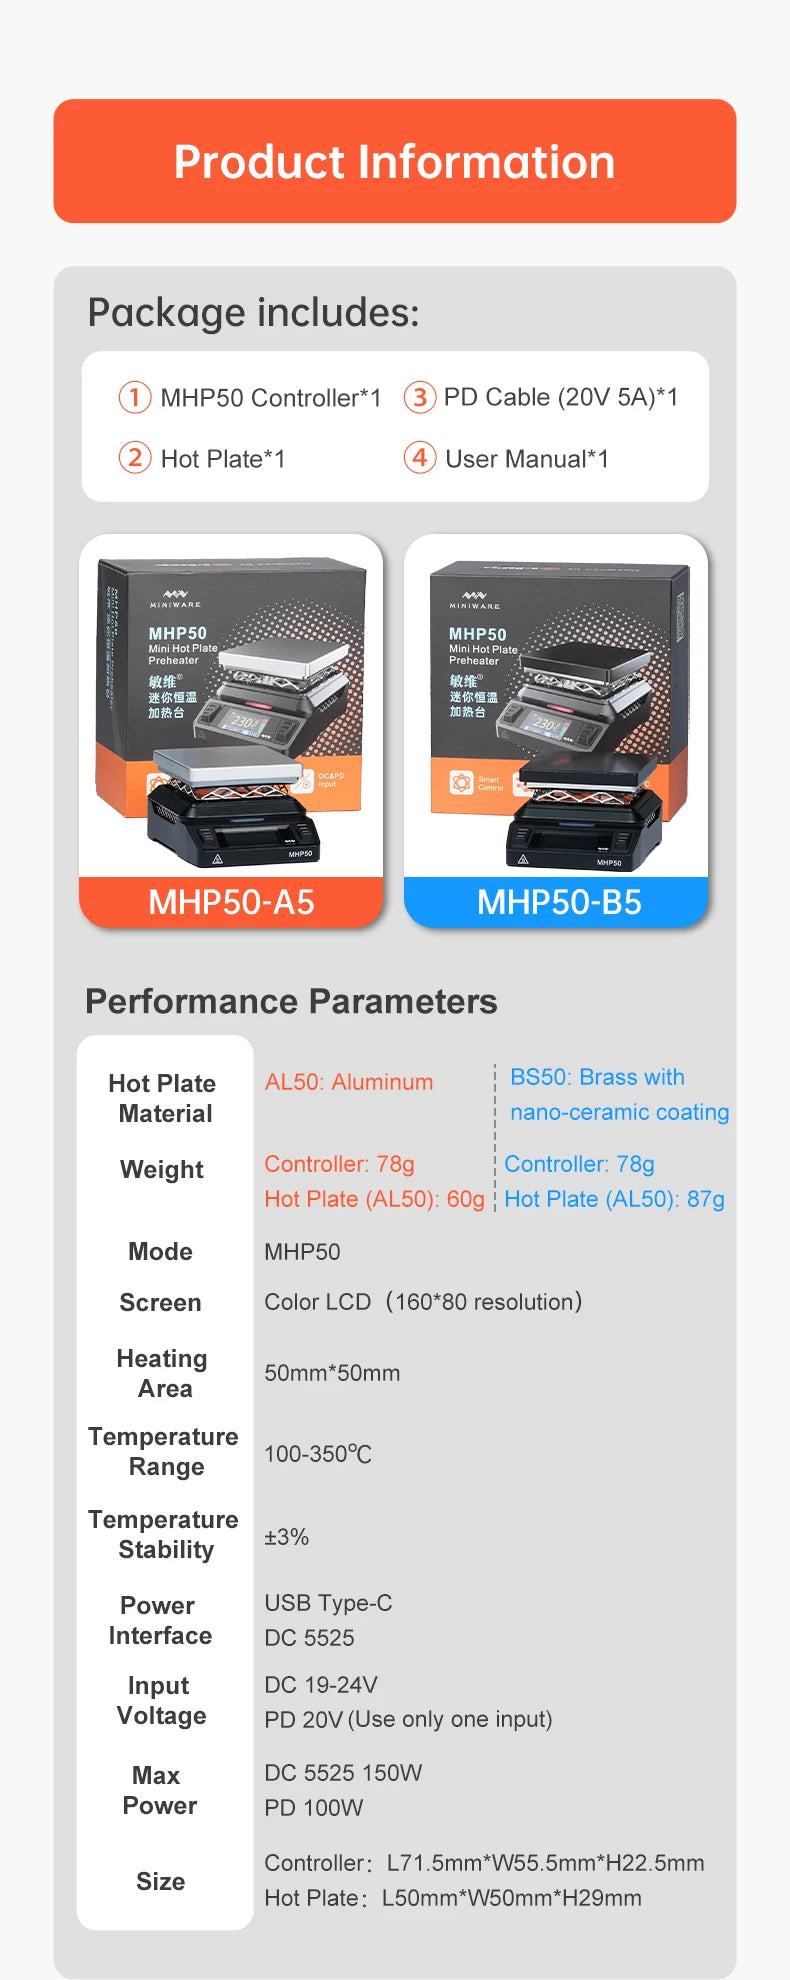 MINIWARE MHP50 Mini Hot Plate Preheater 50*50mm Heating Area Constant Temperature 350℃ Intelligent Heating Tool